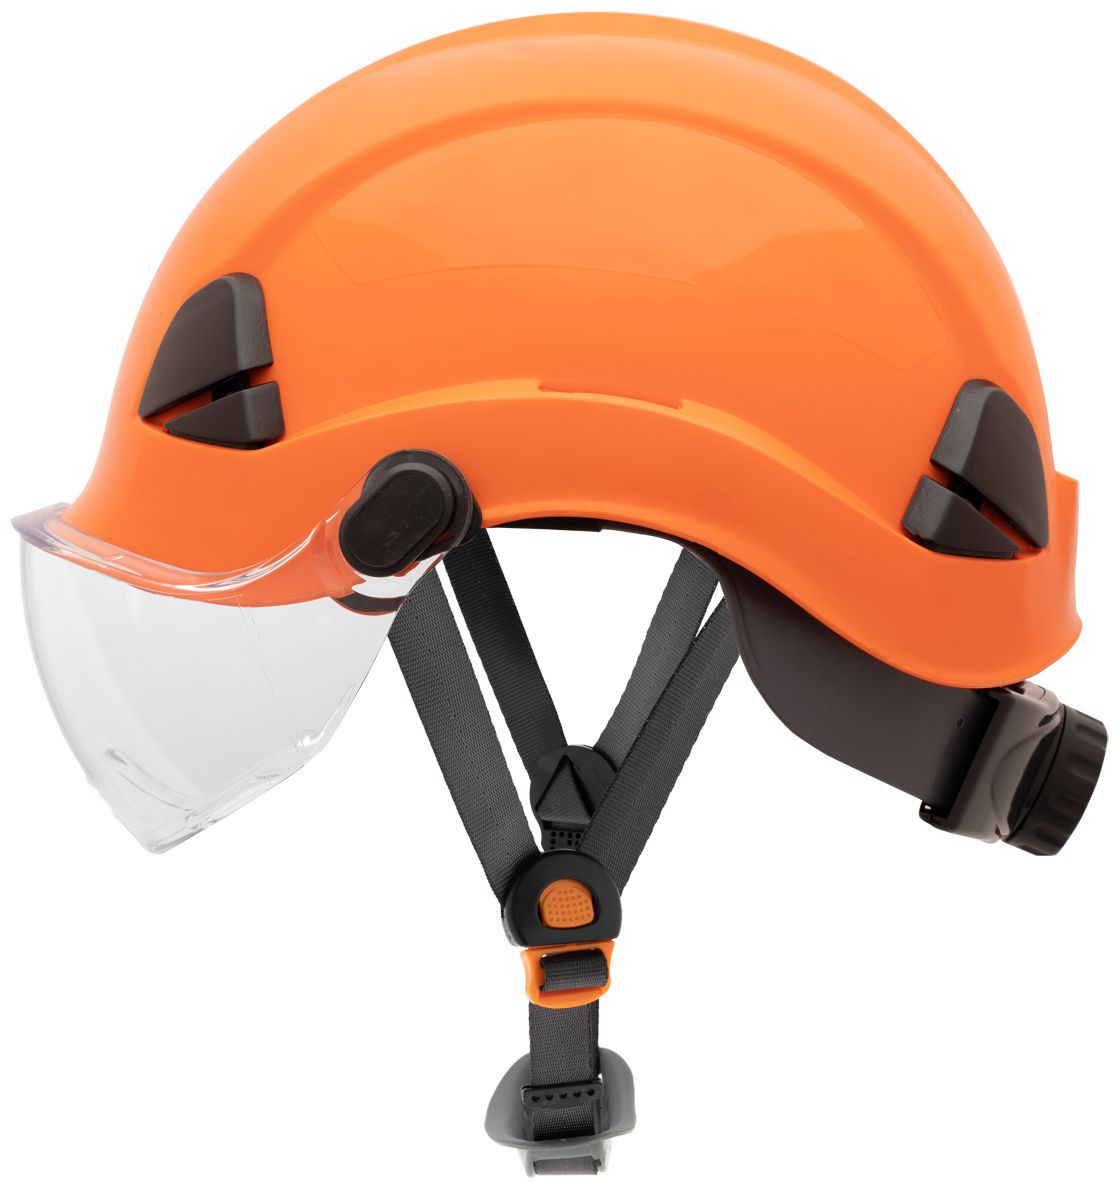 Honeywell Fibre Metal electrician's hard hat - hard hat for construction & industry - EN 166/397/50365 - with flip-up visor - Orange